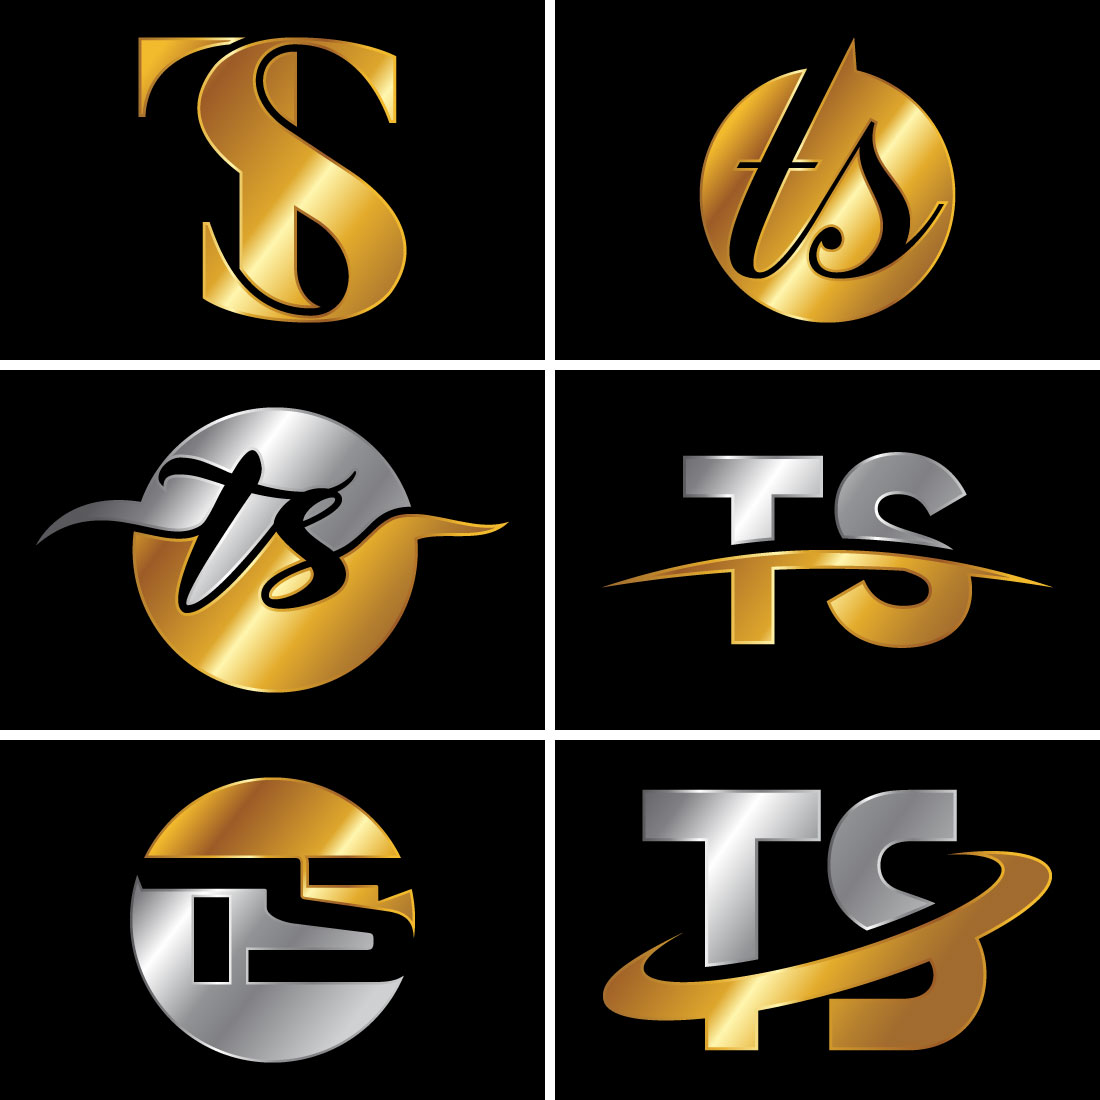 Ts technology logo Royalty Free Vector Image - VectorStock